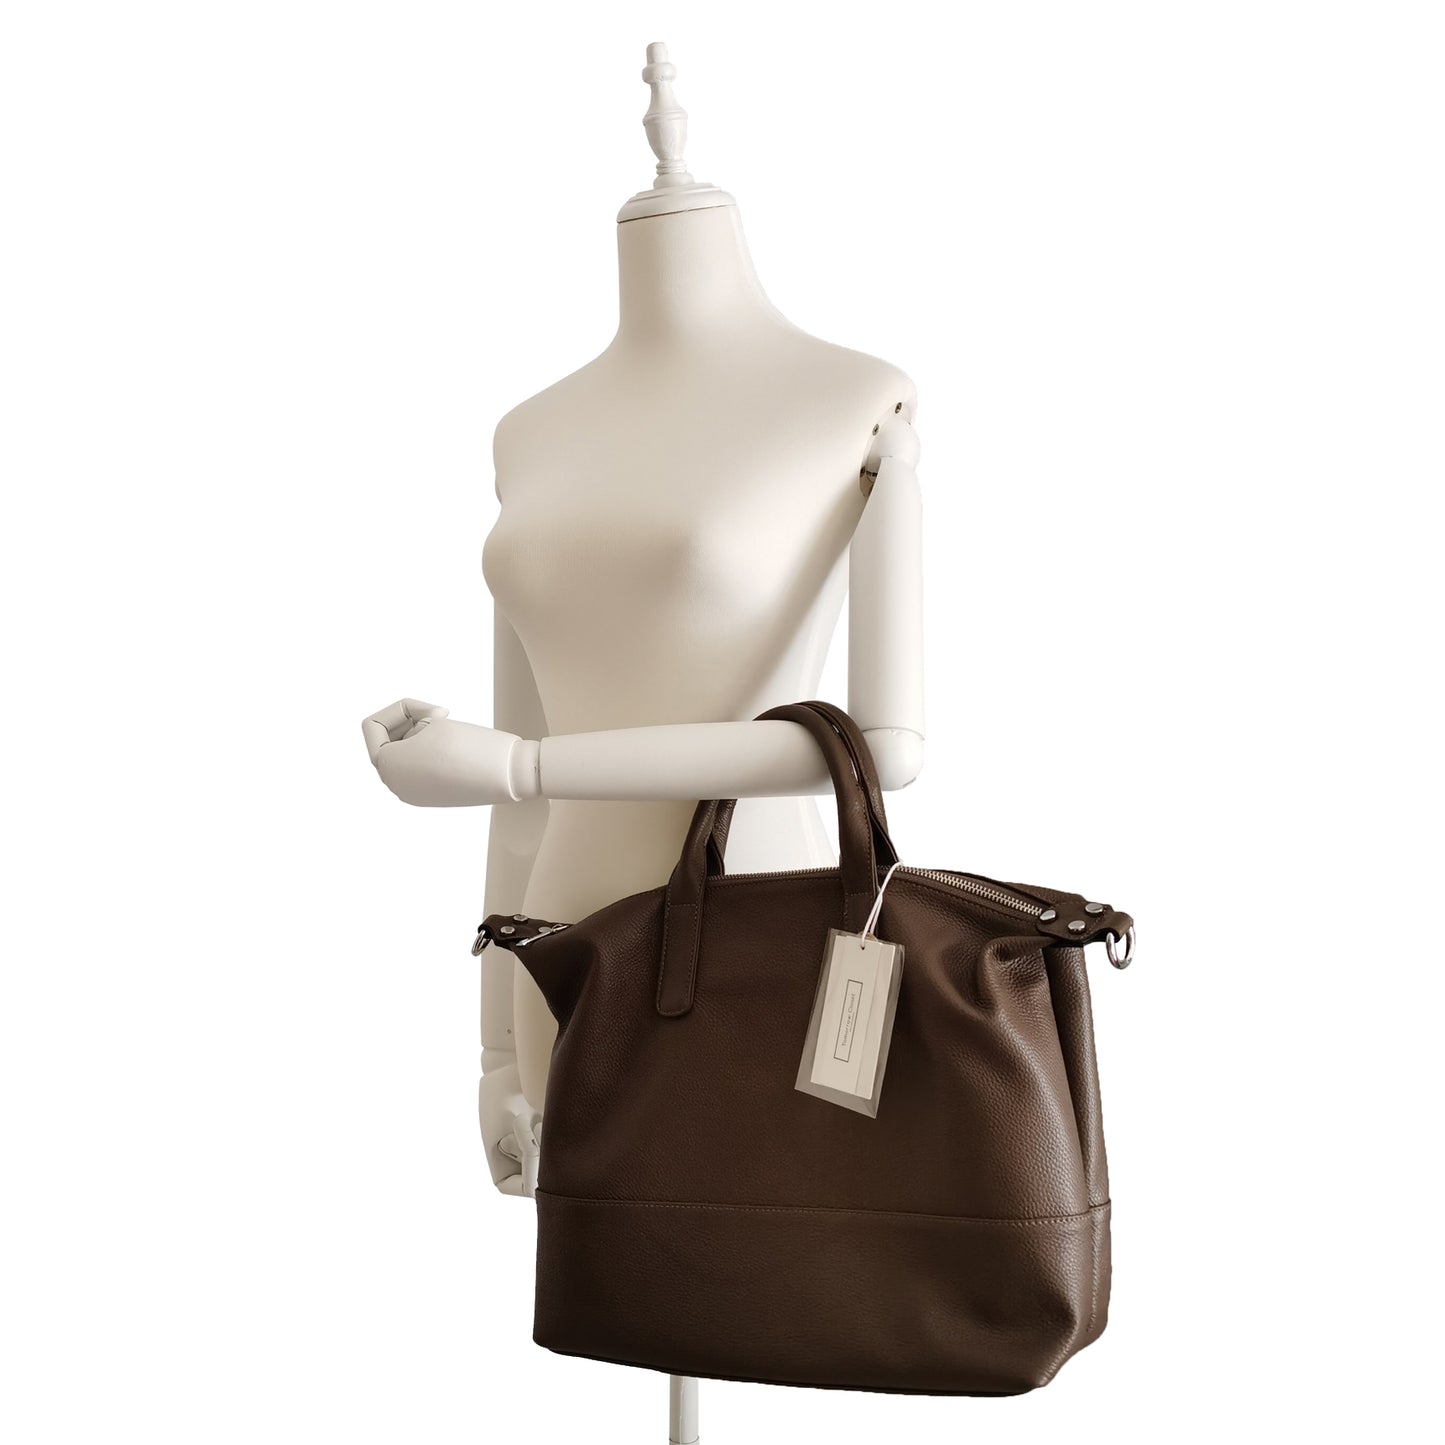 Women's genuine cowhide leather handbag Ellipse V2 design by Tomorrow Closet